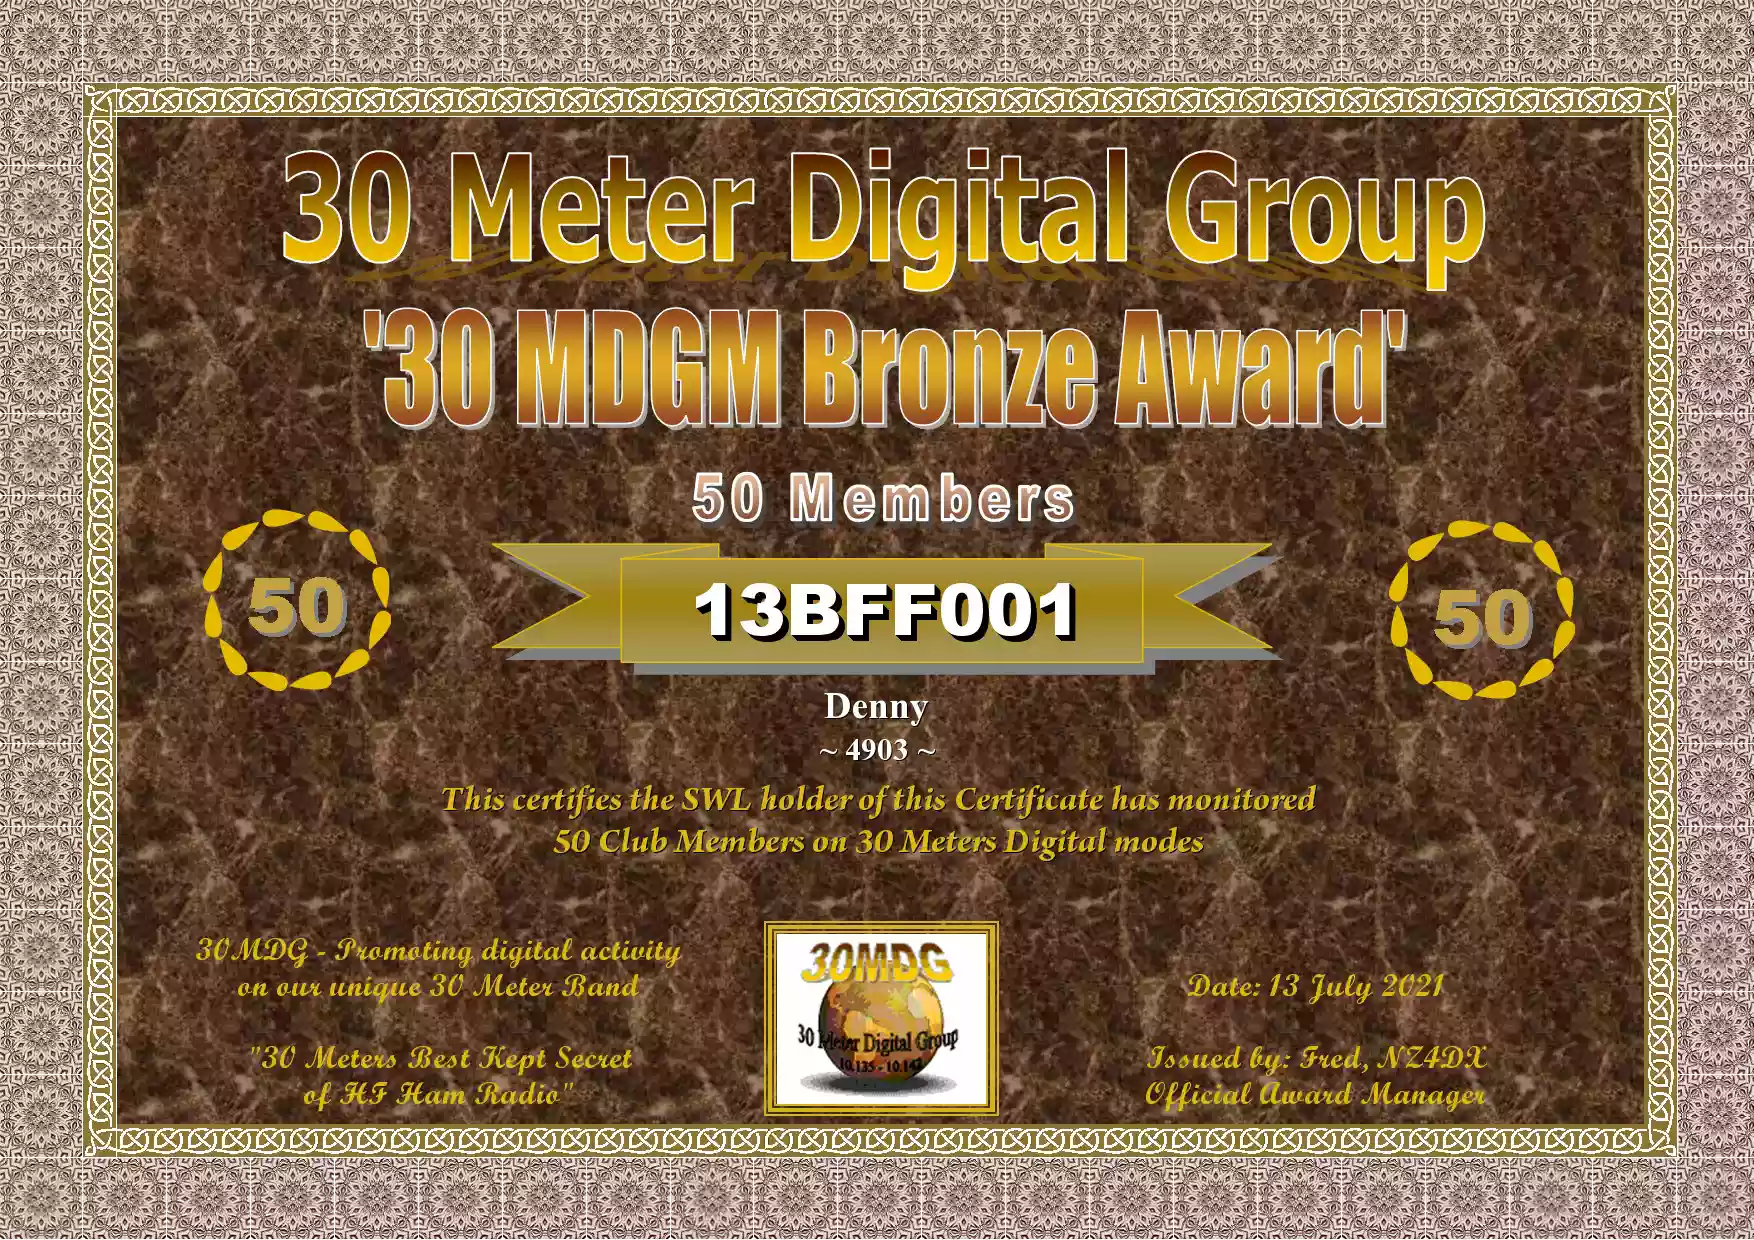 13BFF001 30MDG Certificate